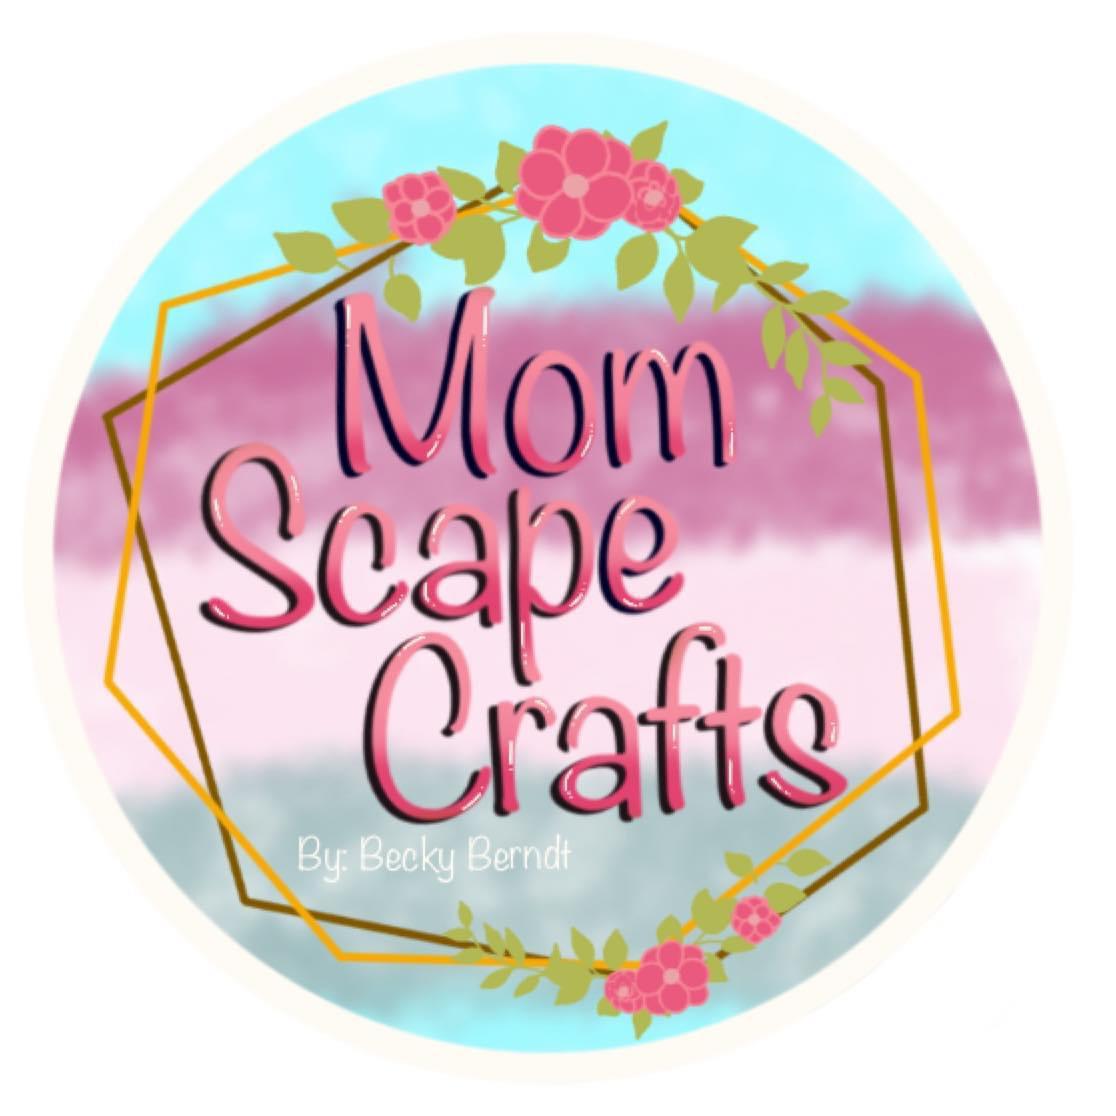 MomScape Crafts's images